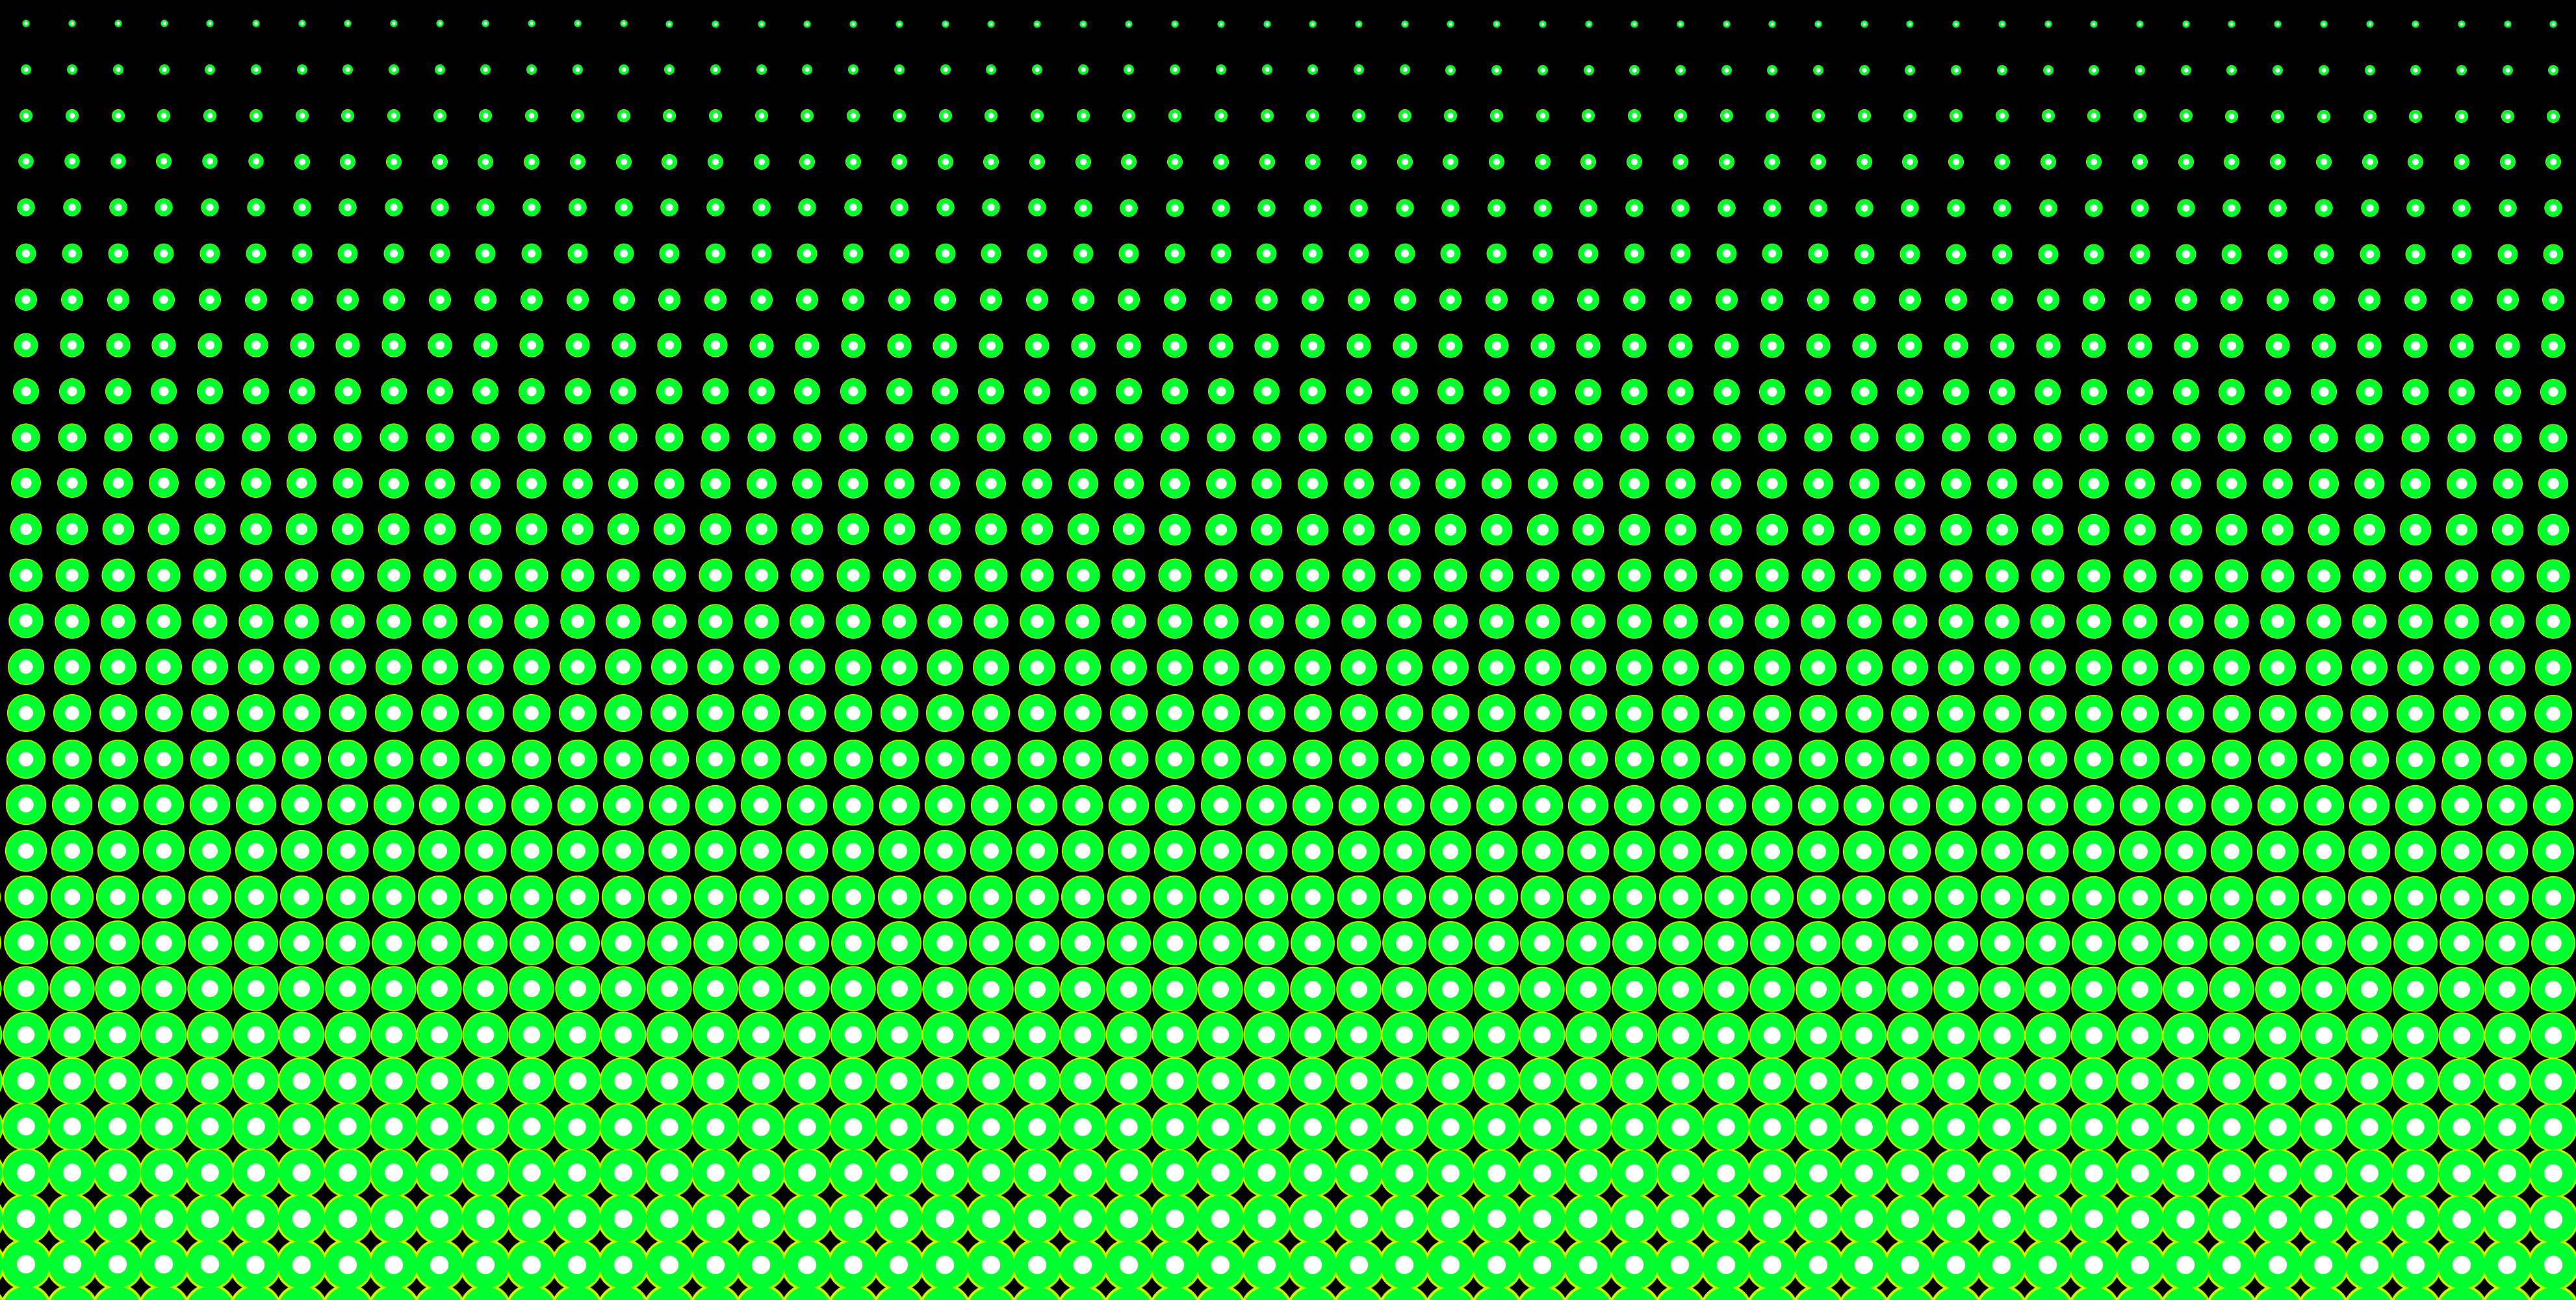 Wallpaper For > Dark Green Wallpaper Pattern